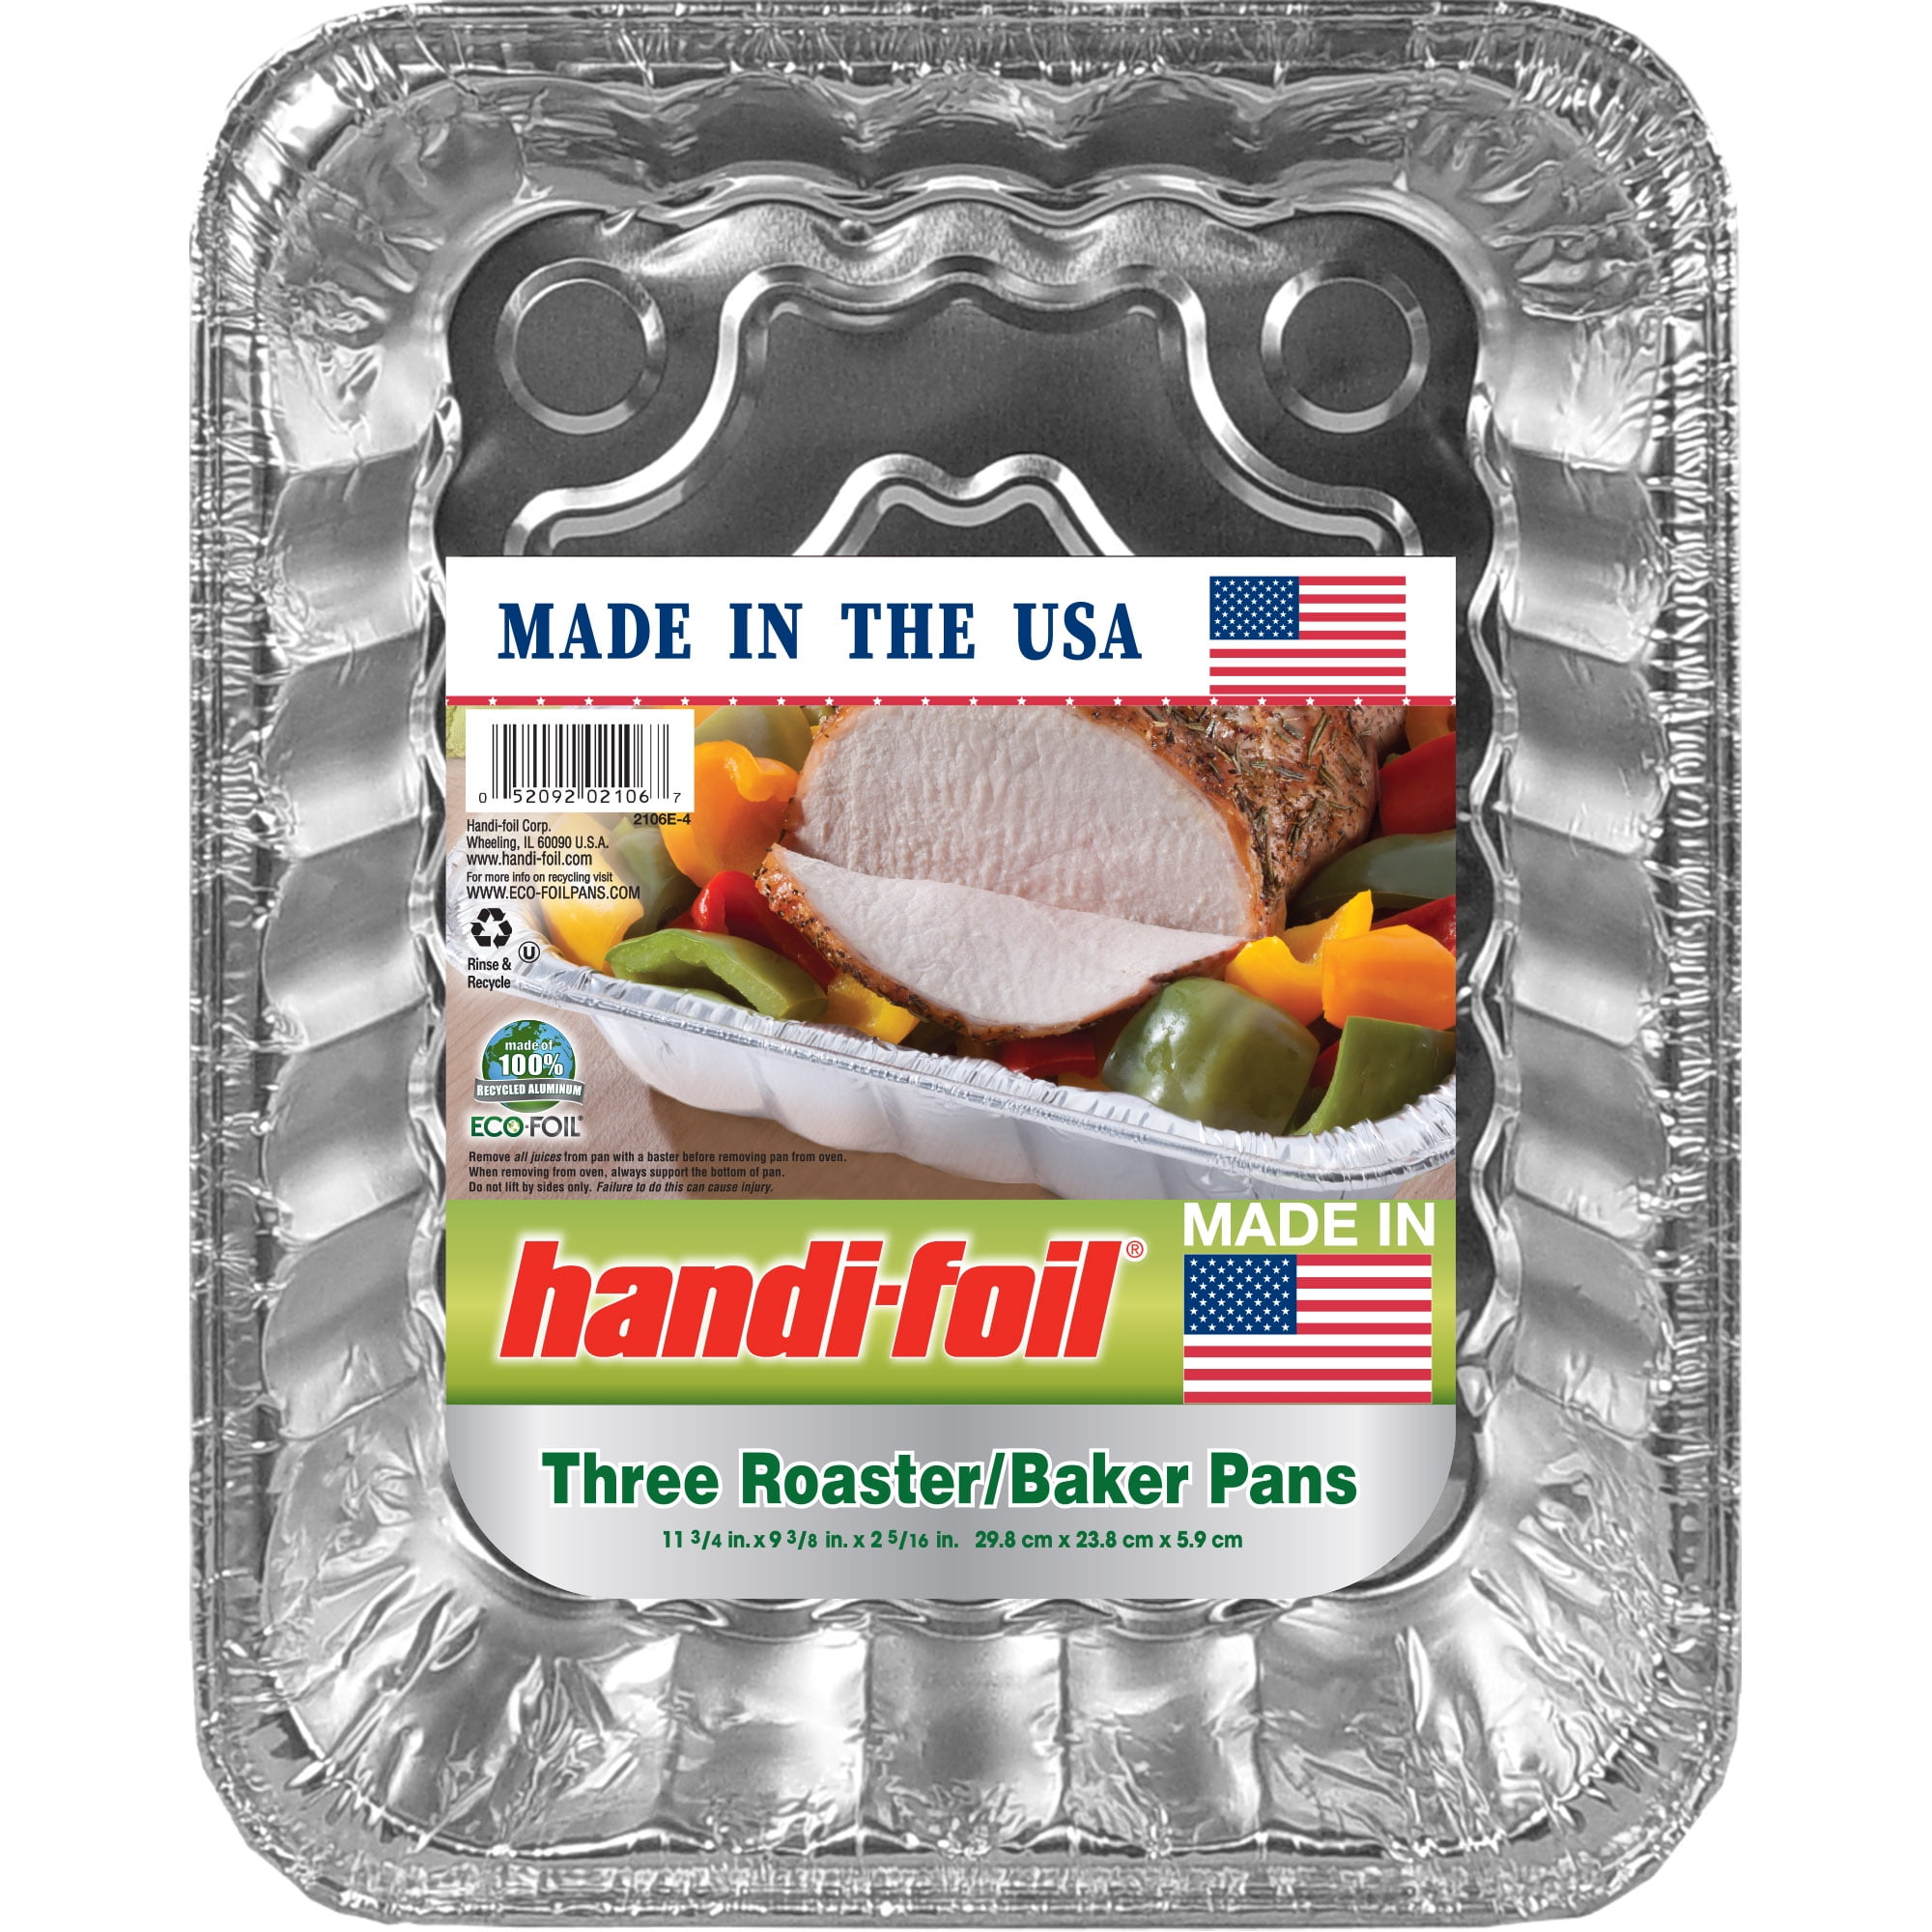 Handi Foil Eco-Foil Ultimates Roaster/Baker Pans - 3 pans